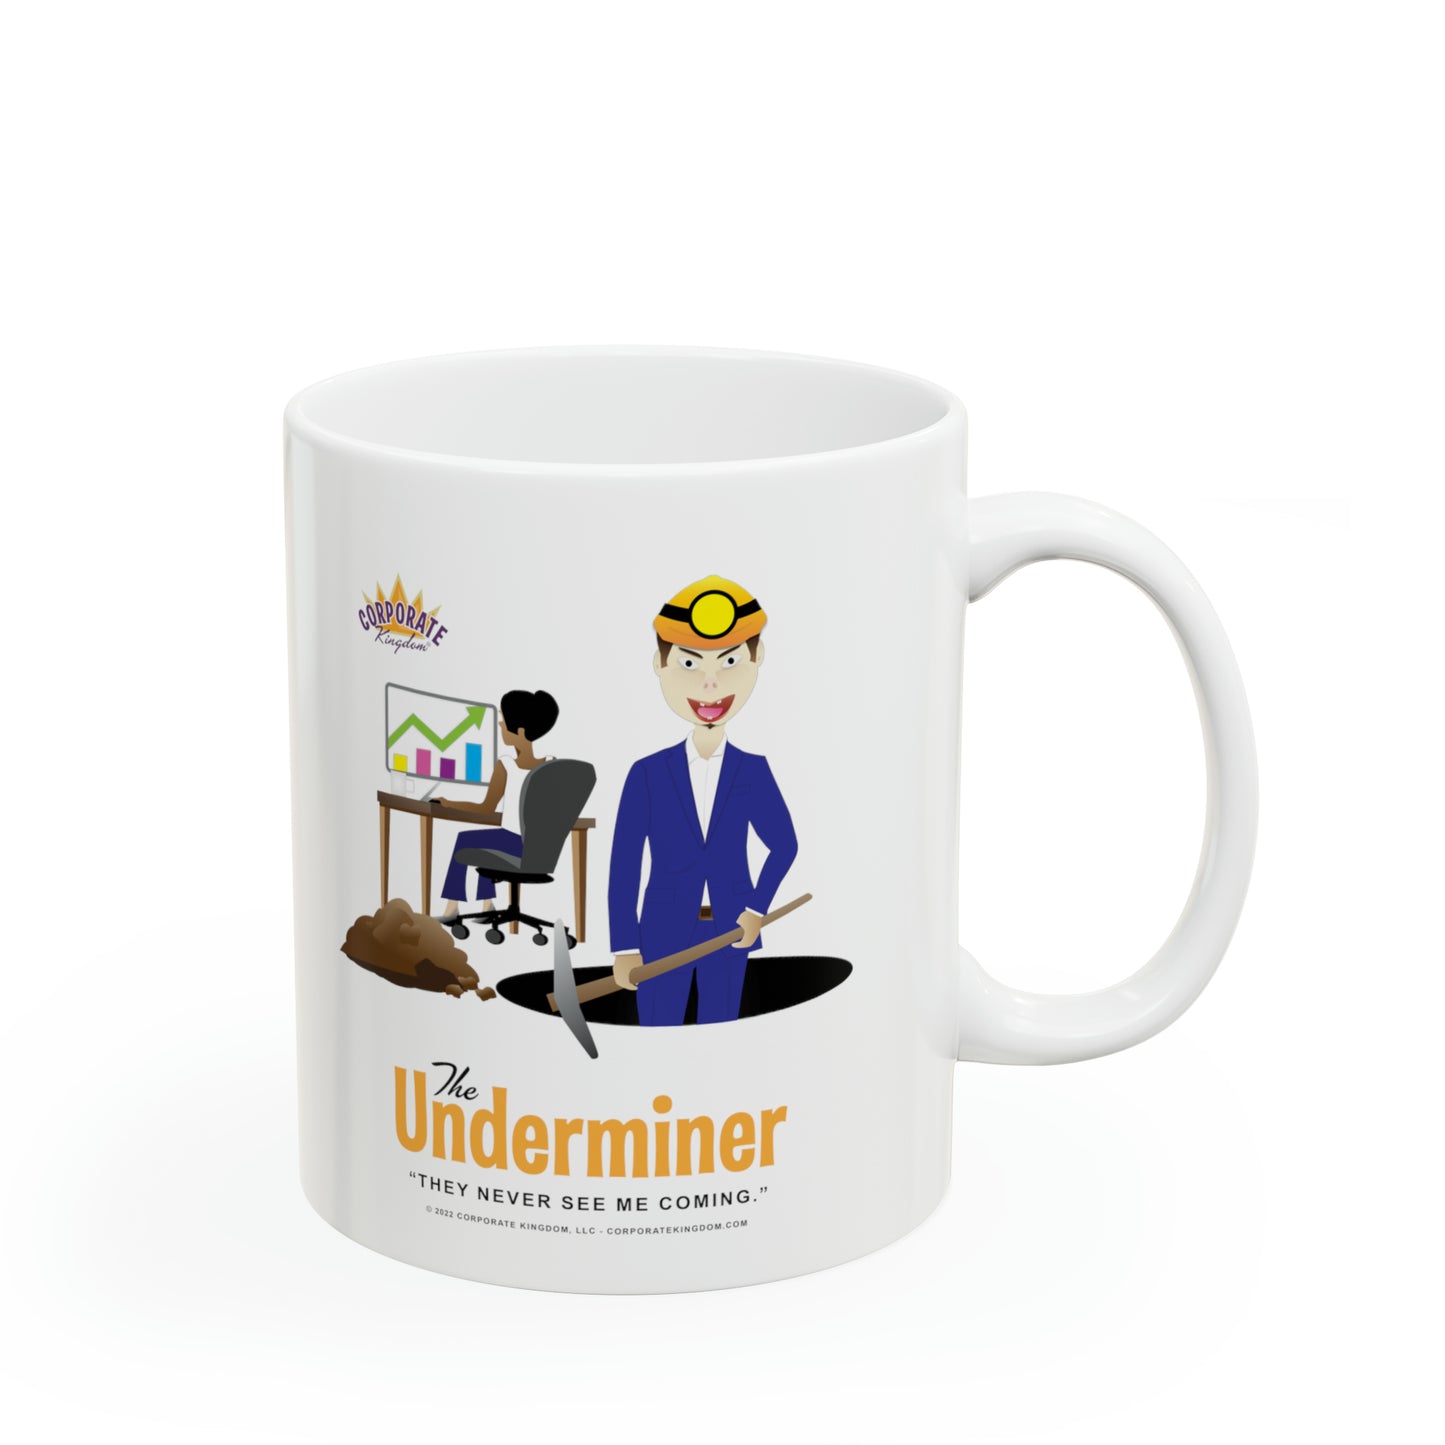 Underminer Coffee Mug by Corporate Kingdom®